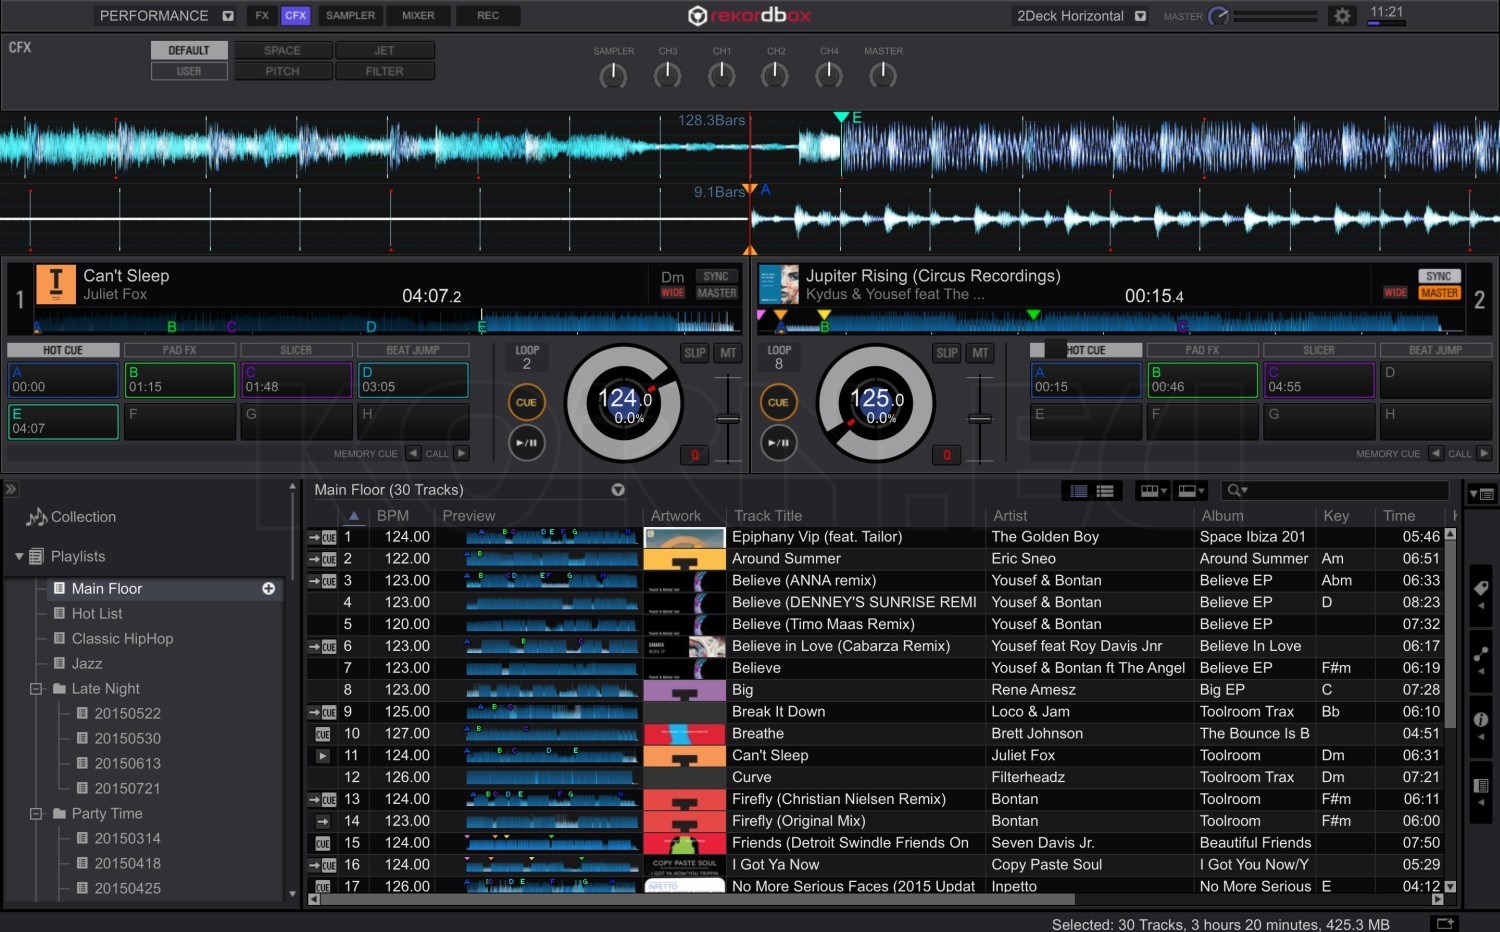 download the new for ios Pioneer DJ rekordbox 6.7.4